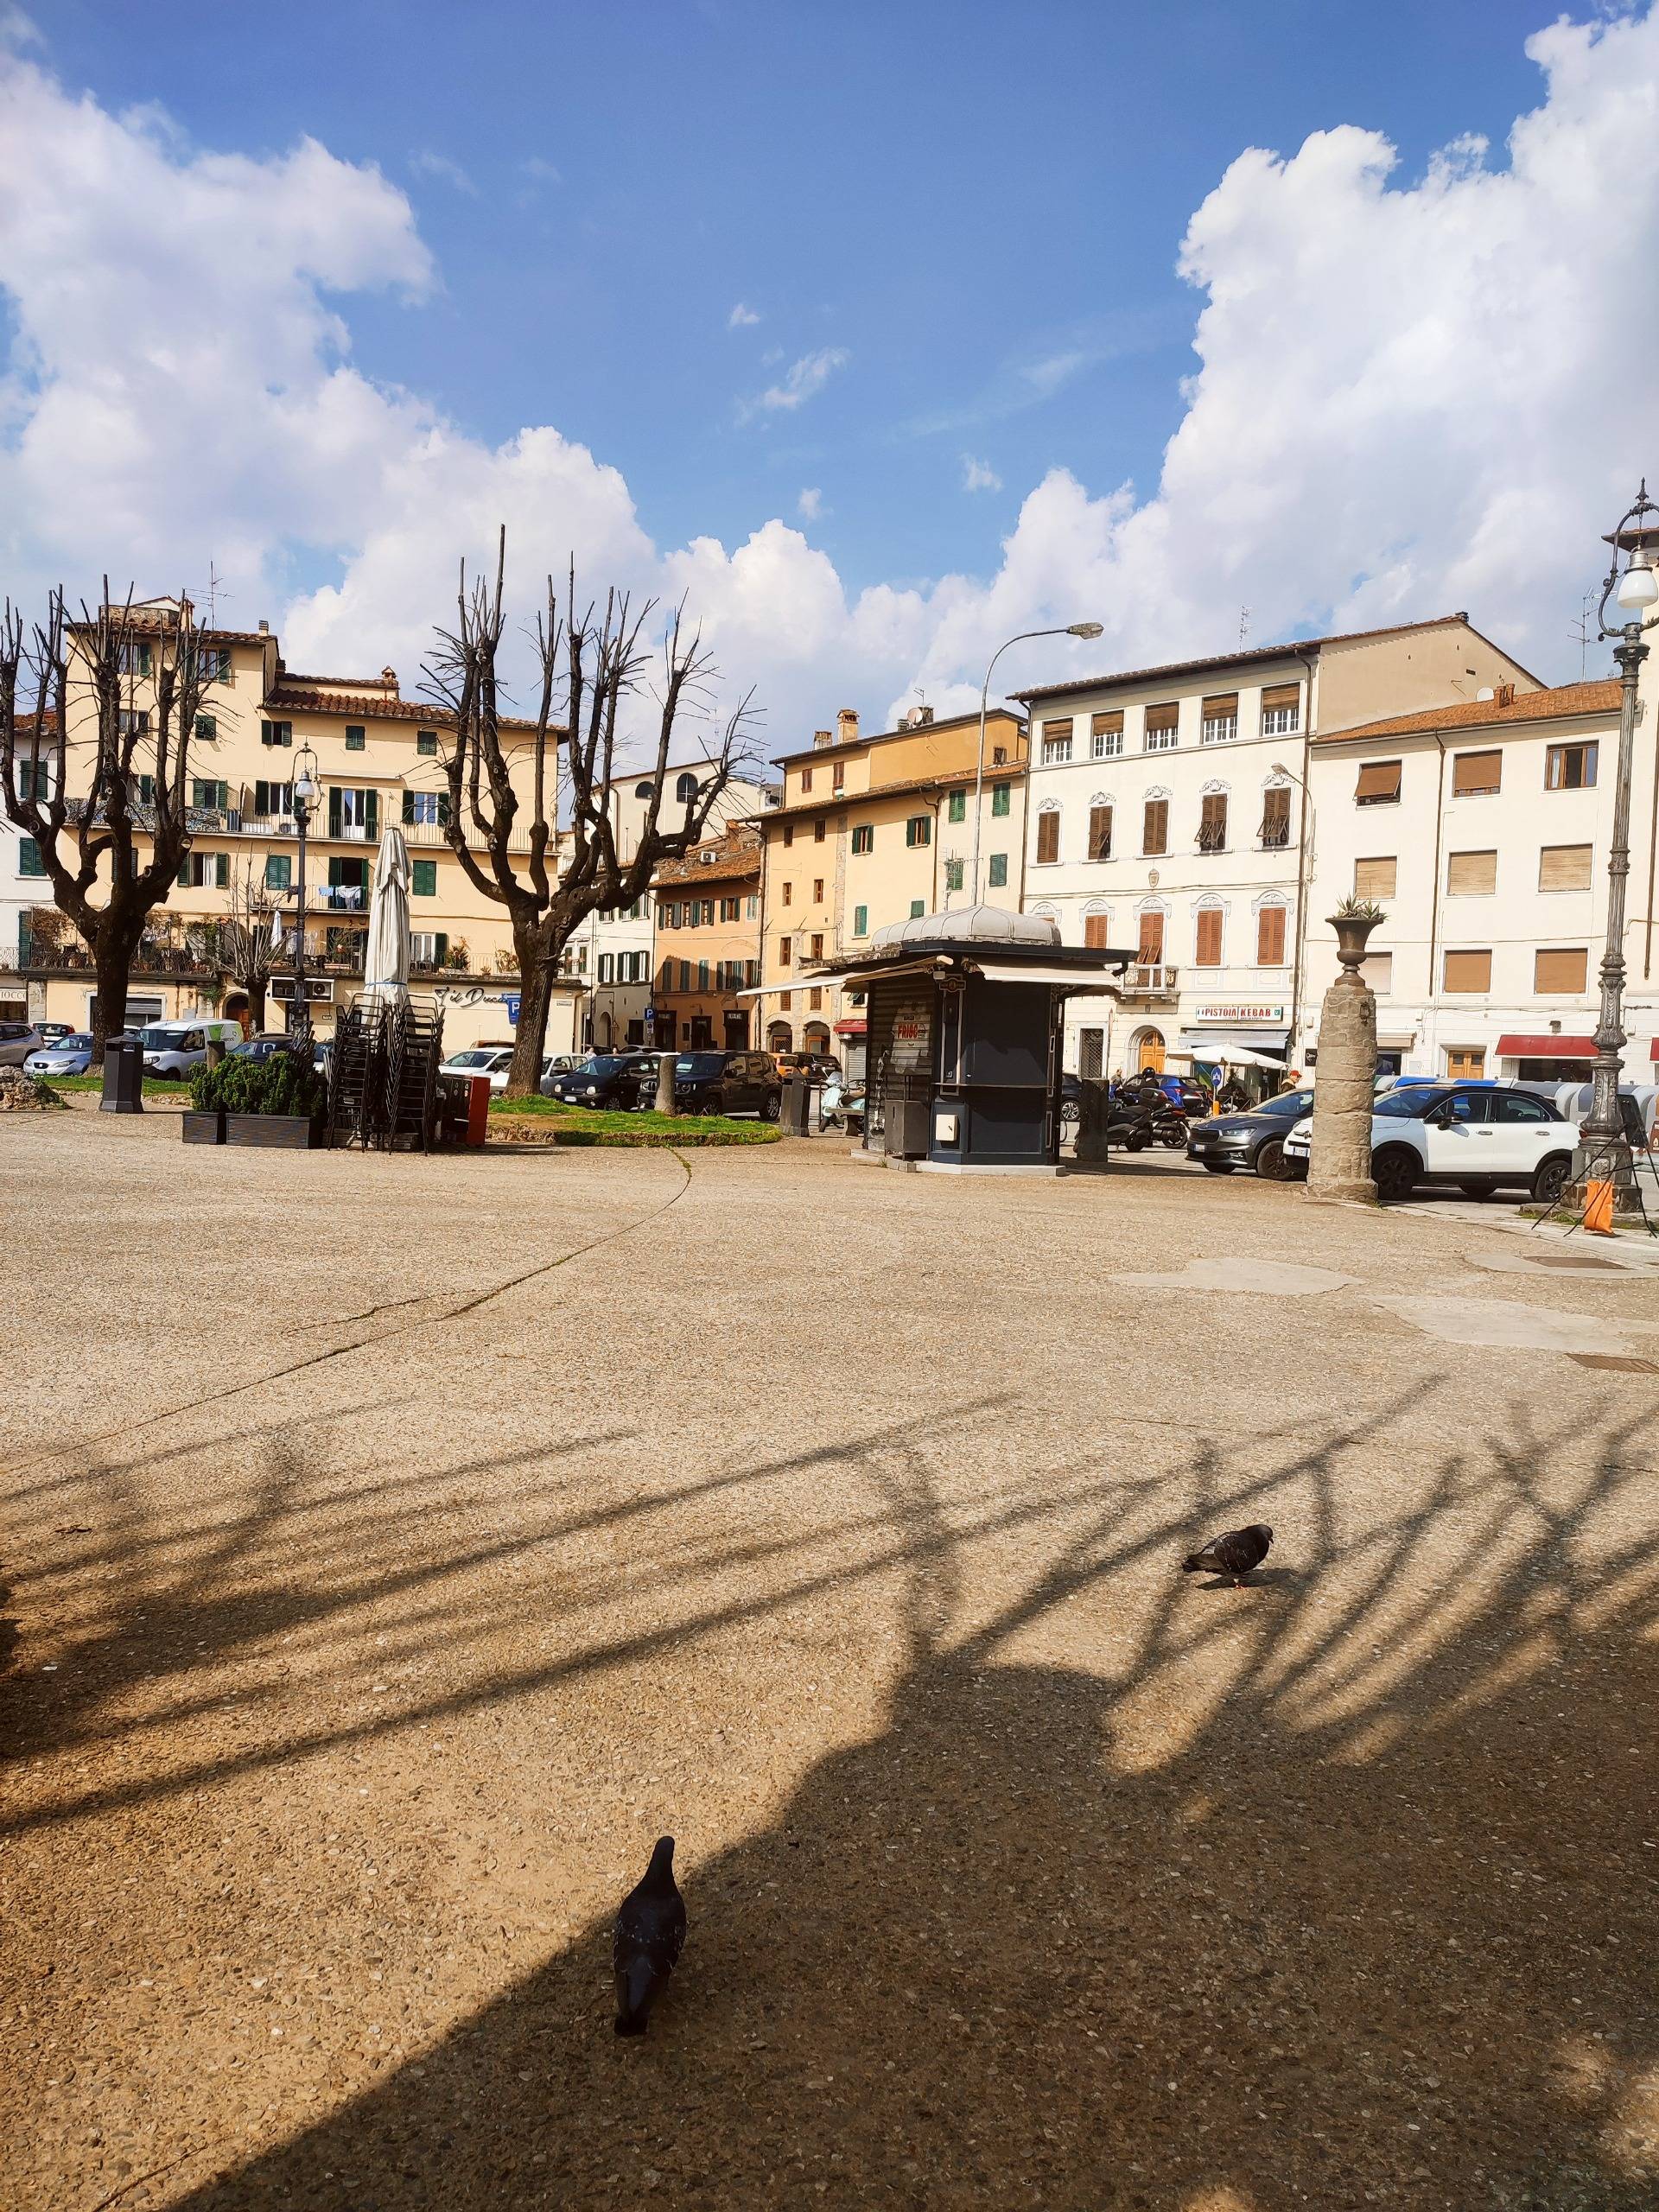 The beauty of Piazza San Francesco. 